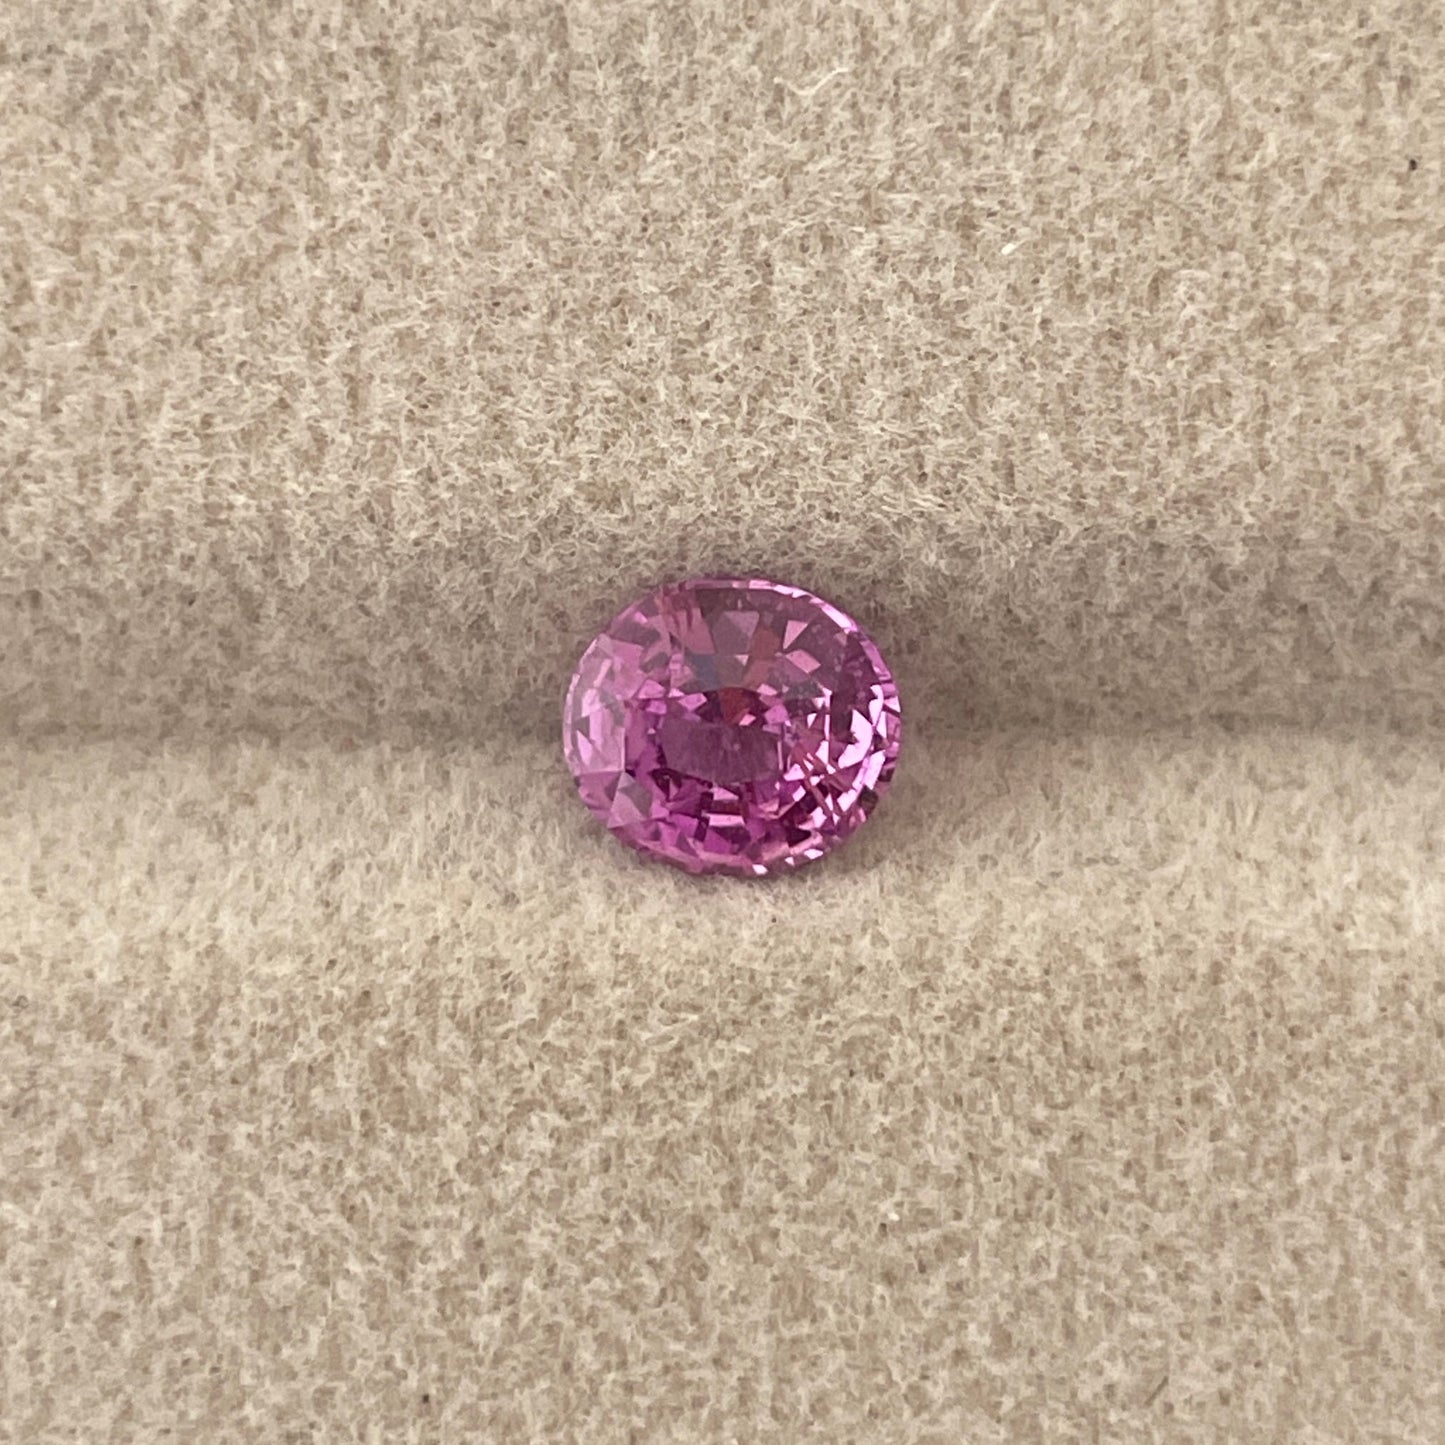 1.09 crt natural sakura Pink Sapphire, certified